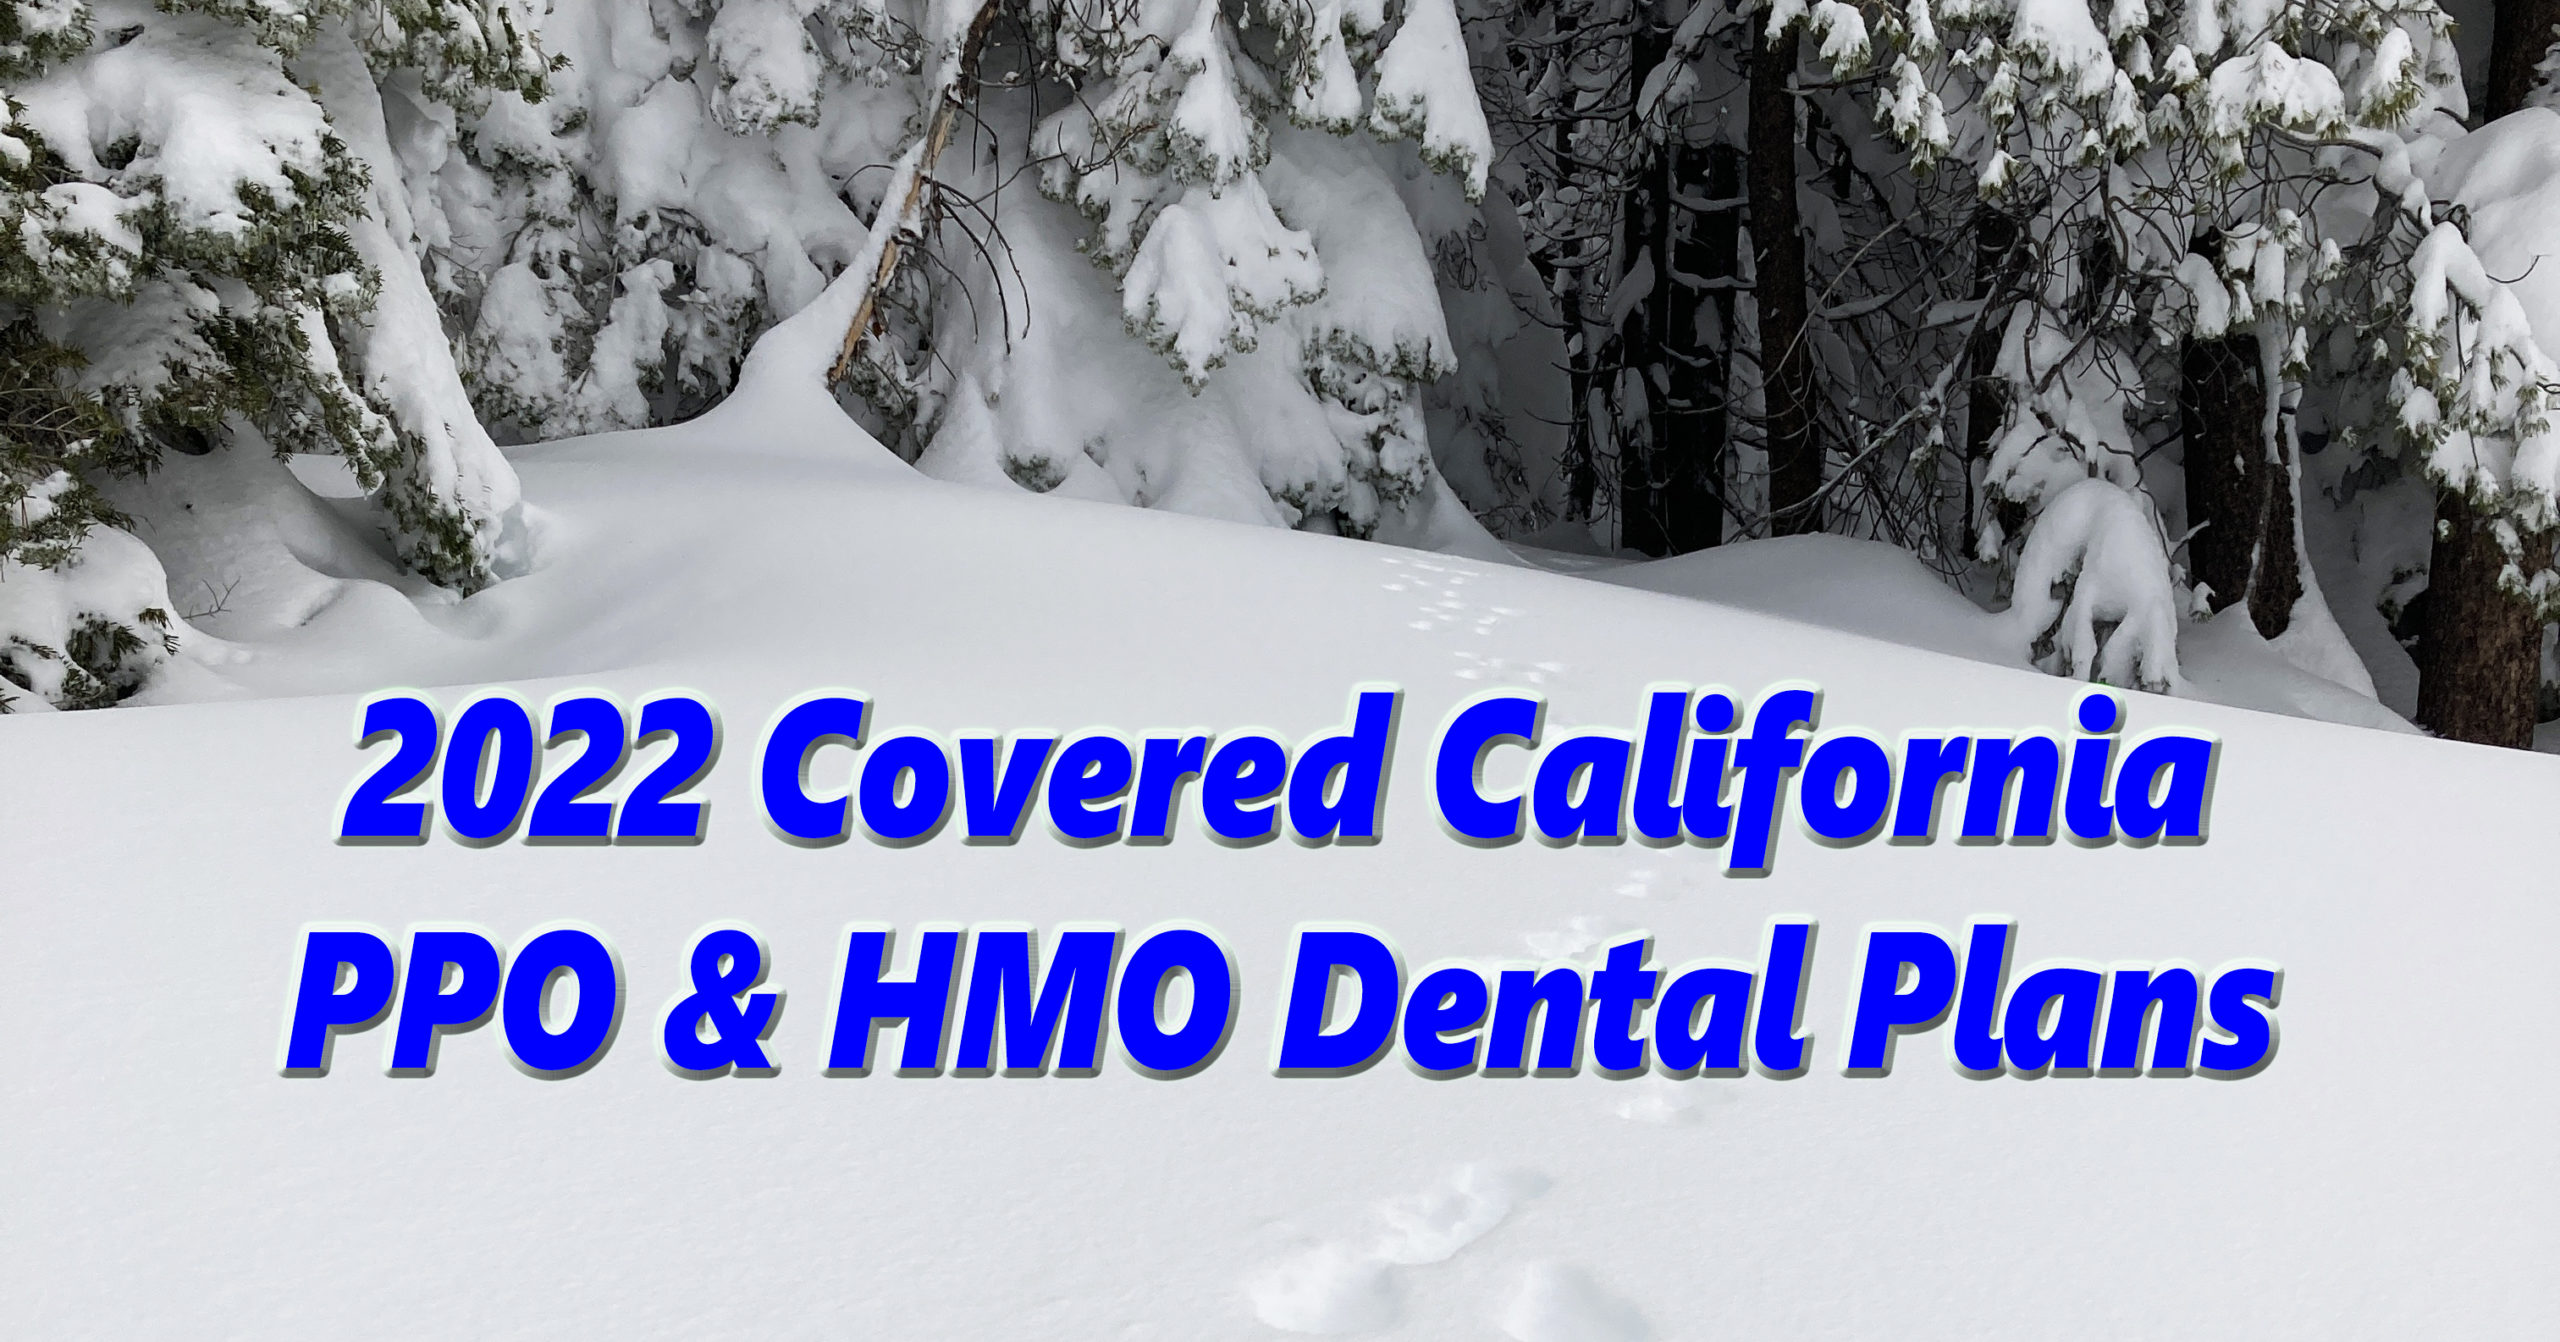 Covered California dental plan summaries for 2022.